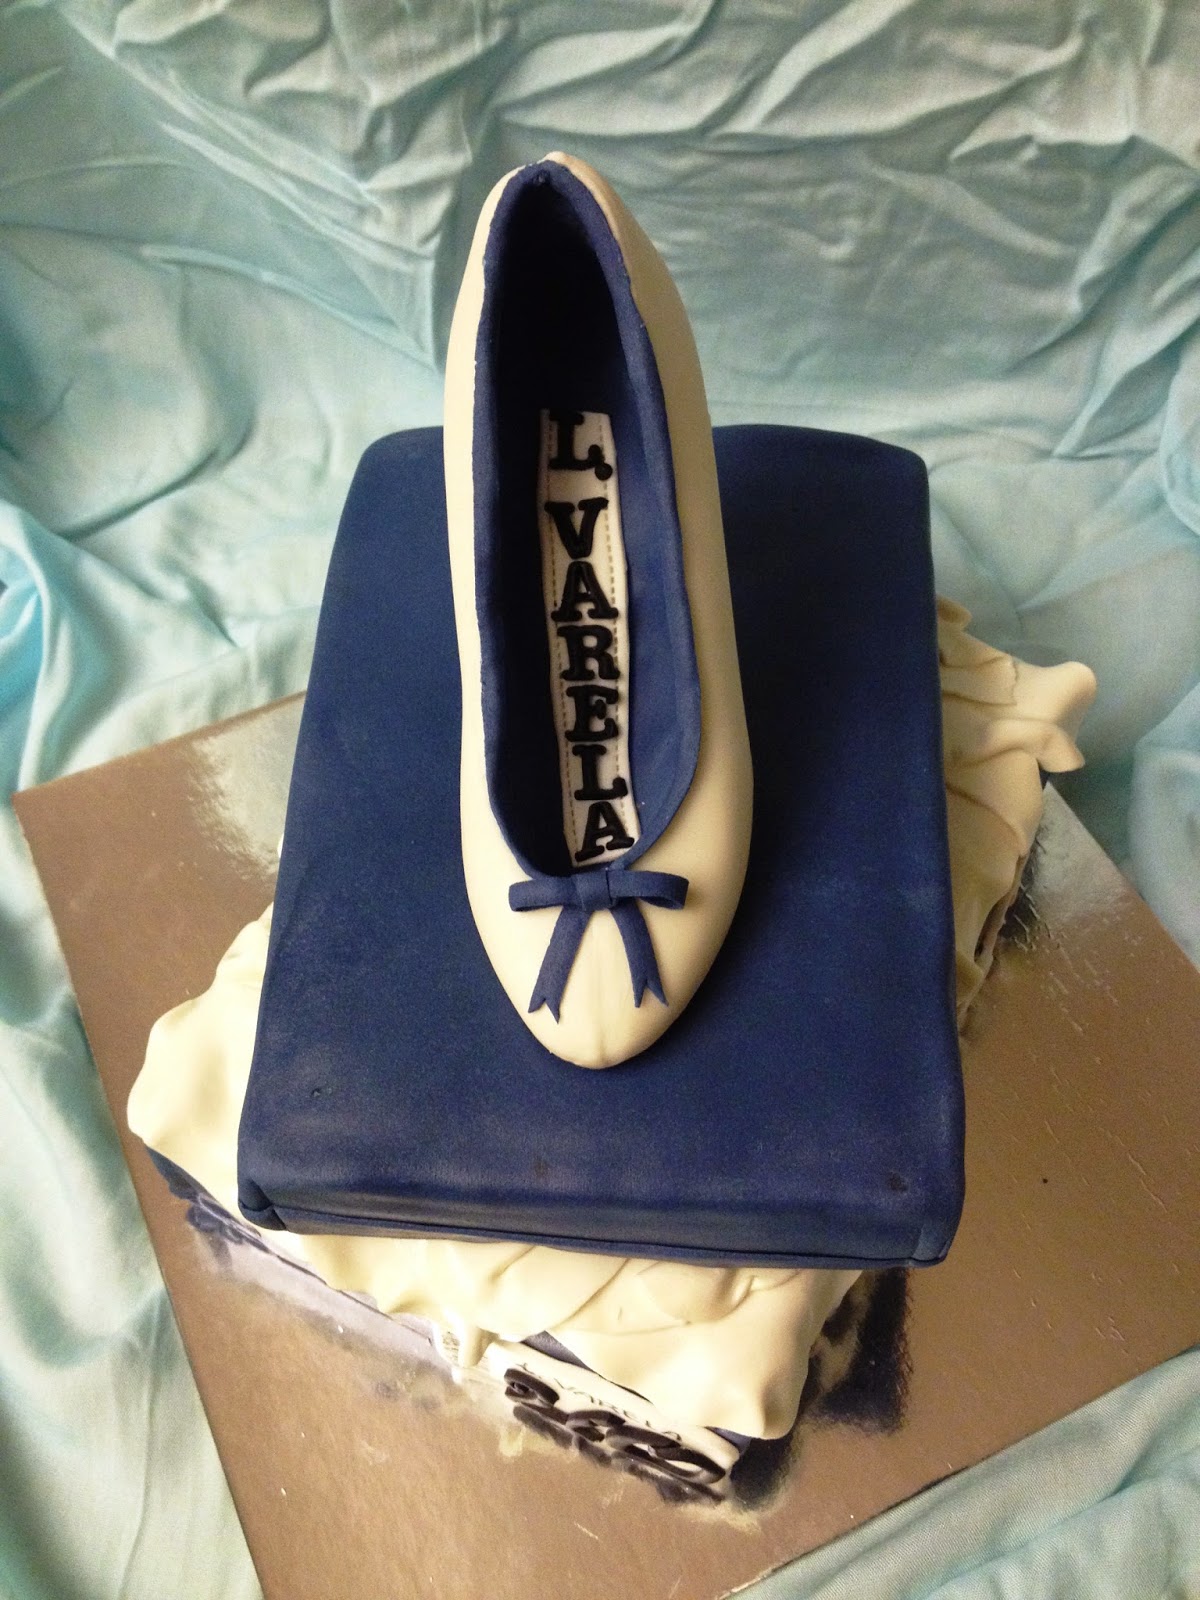 tarta chocolate; zapato chocolate; tarta fondant zapato; tarta decorada zapato; tarta zapato